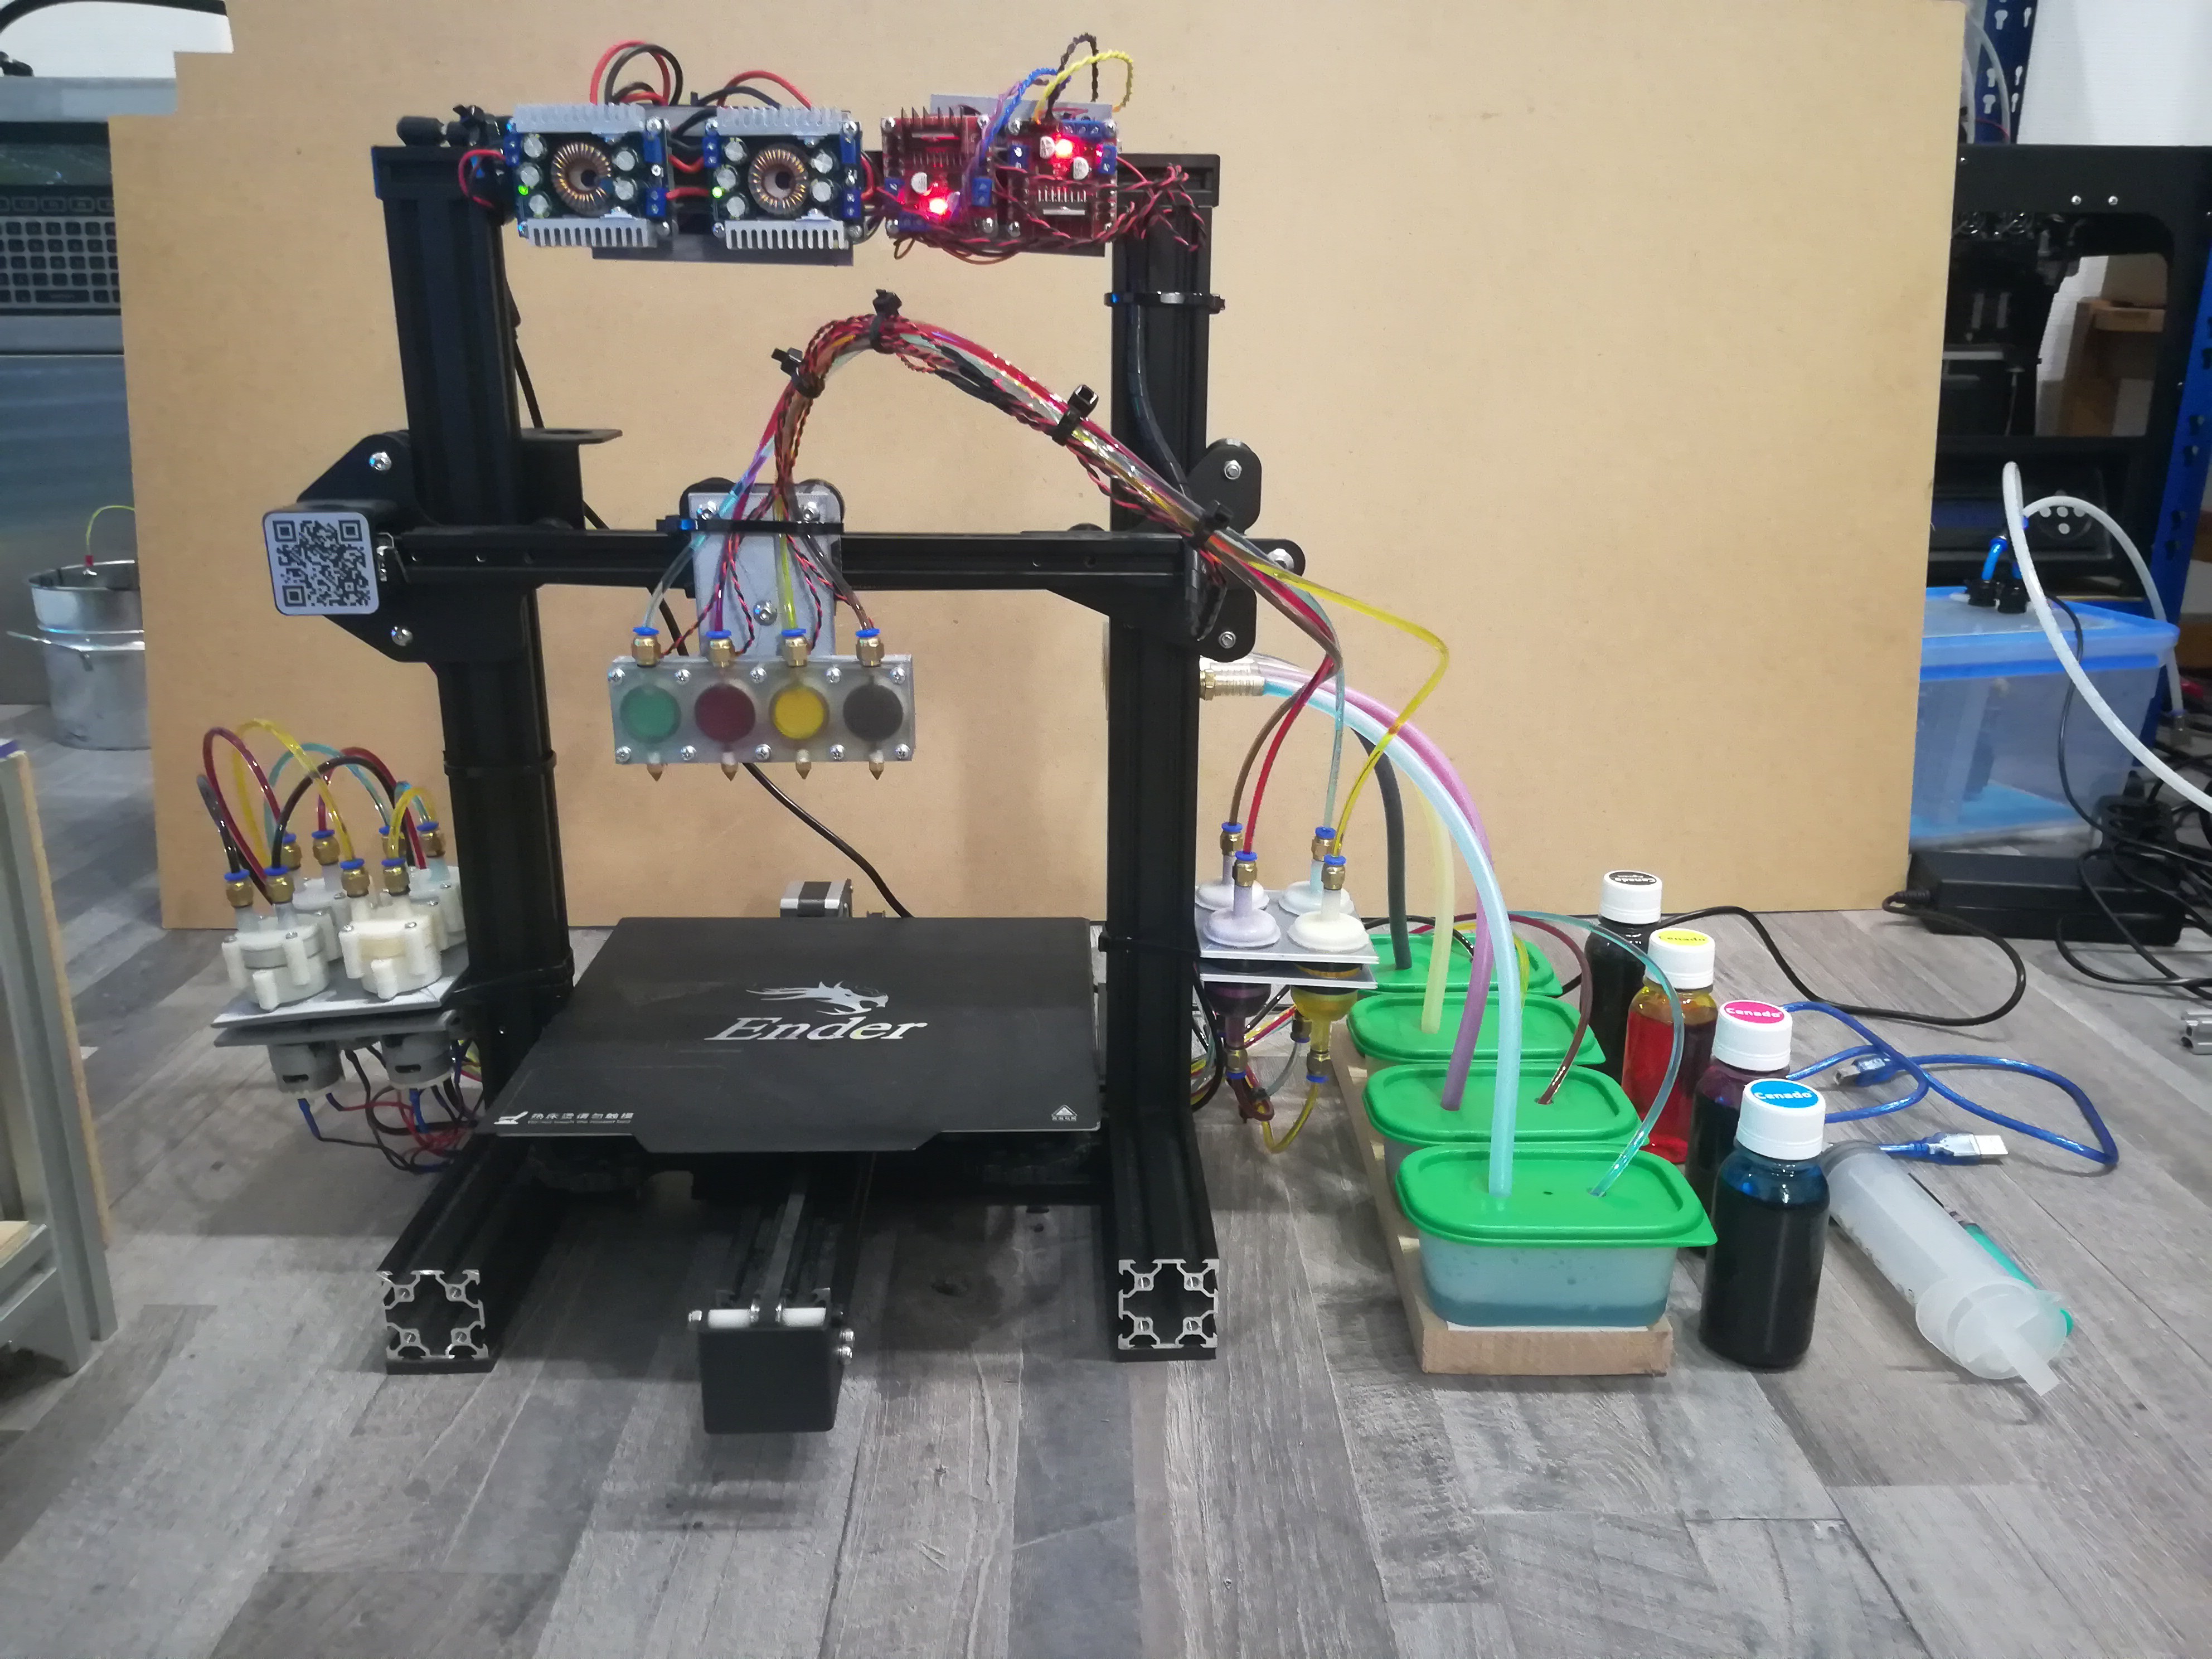 DIY 3D Printer: How to Build Your Own 3D Printer